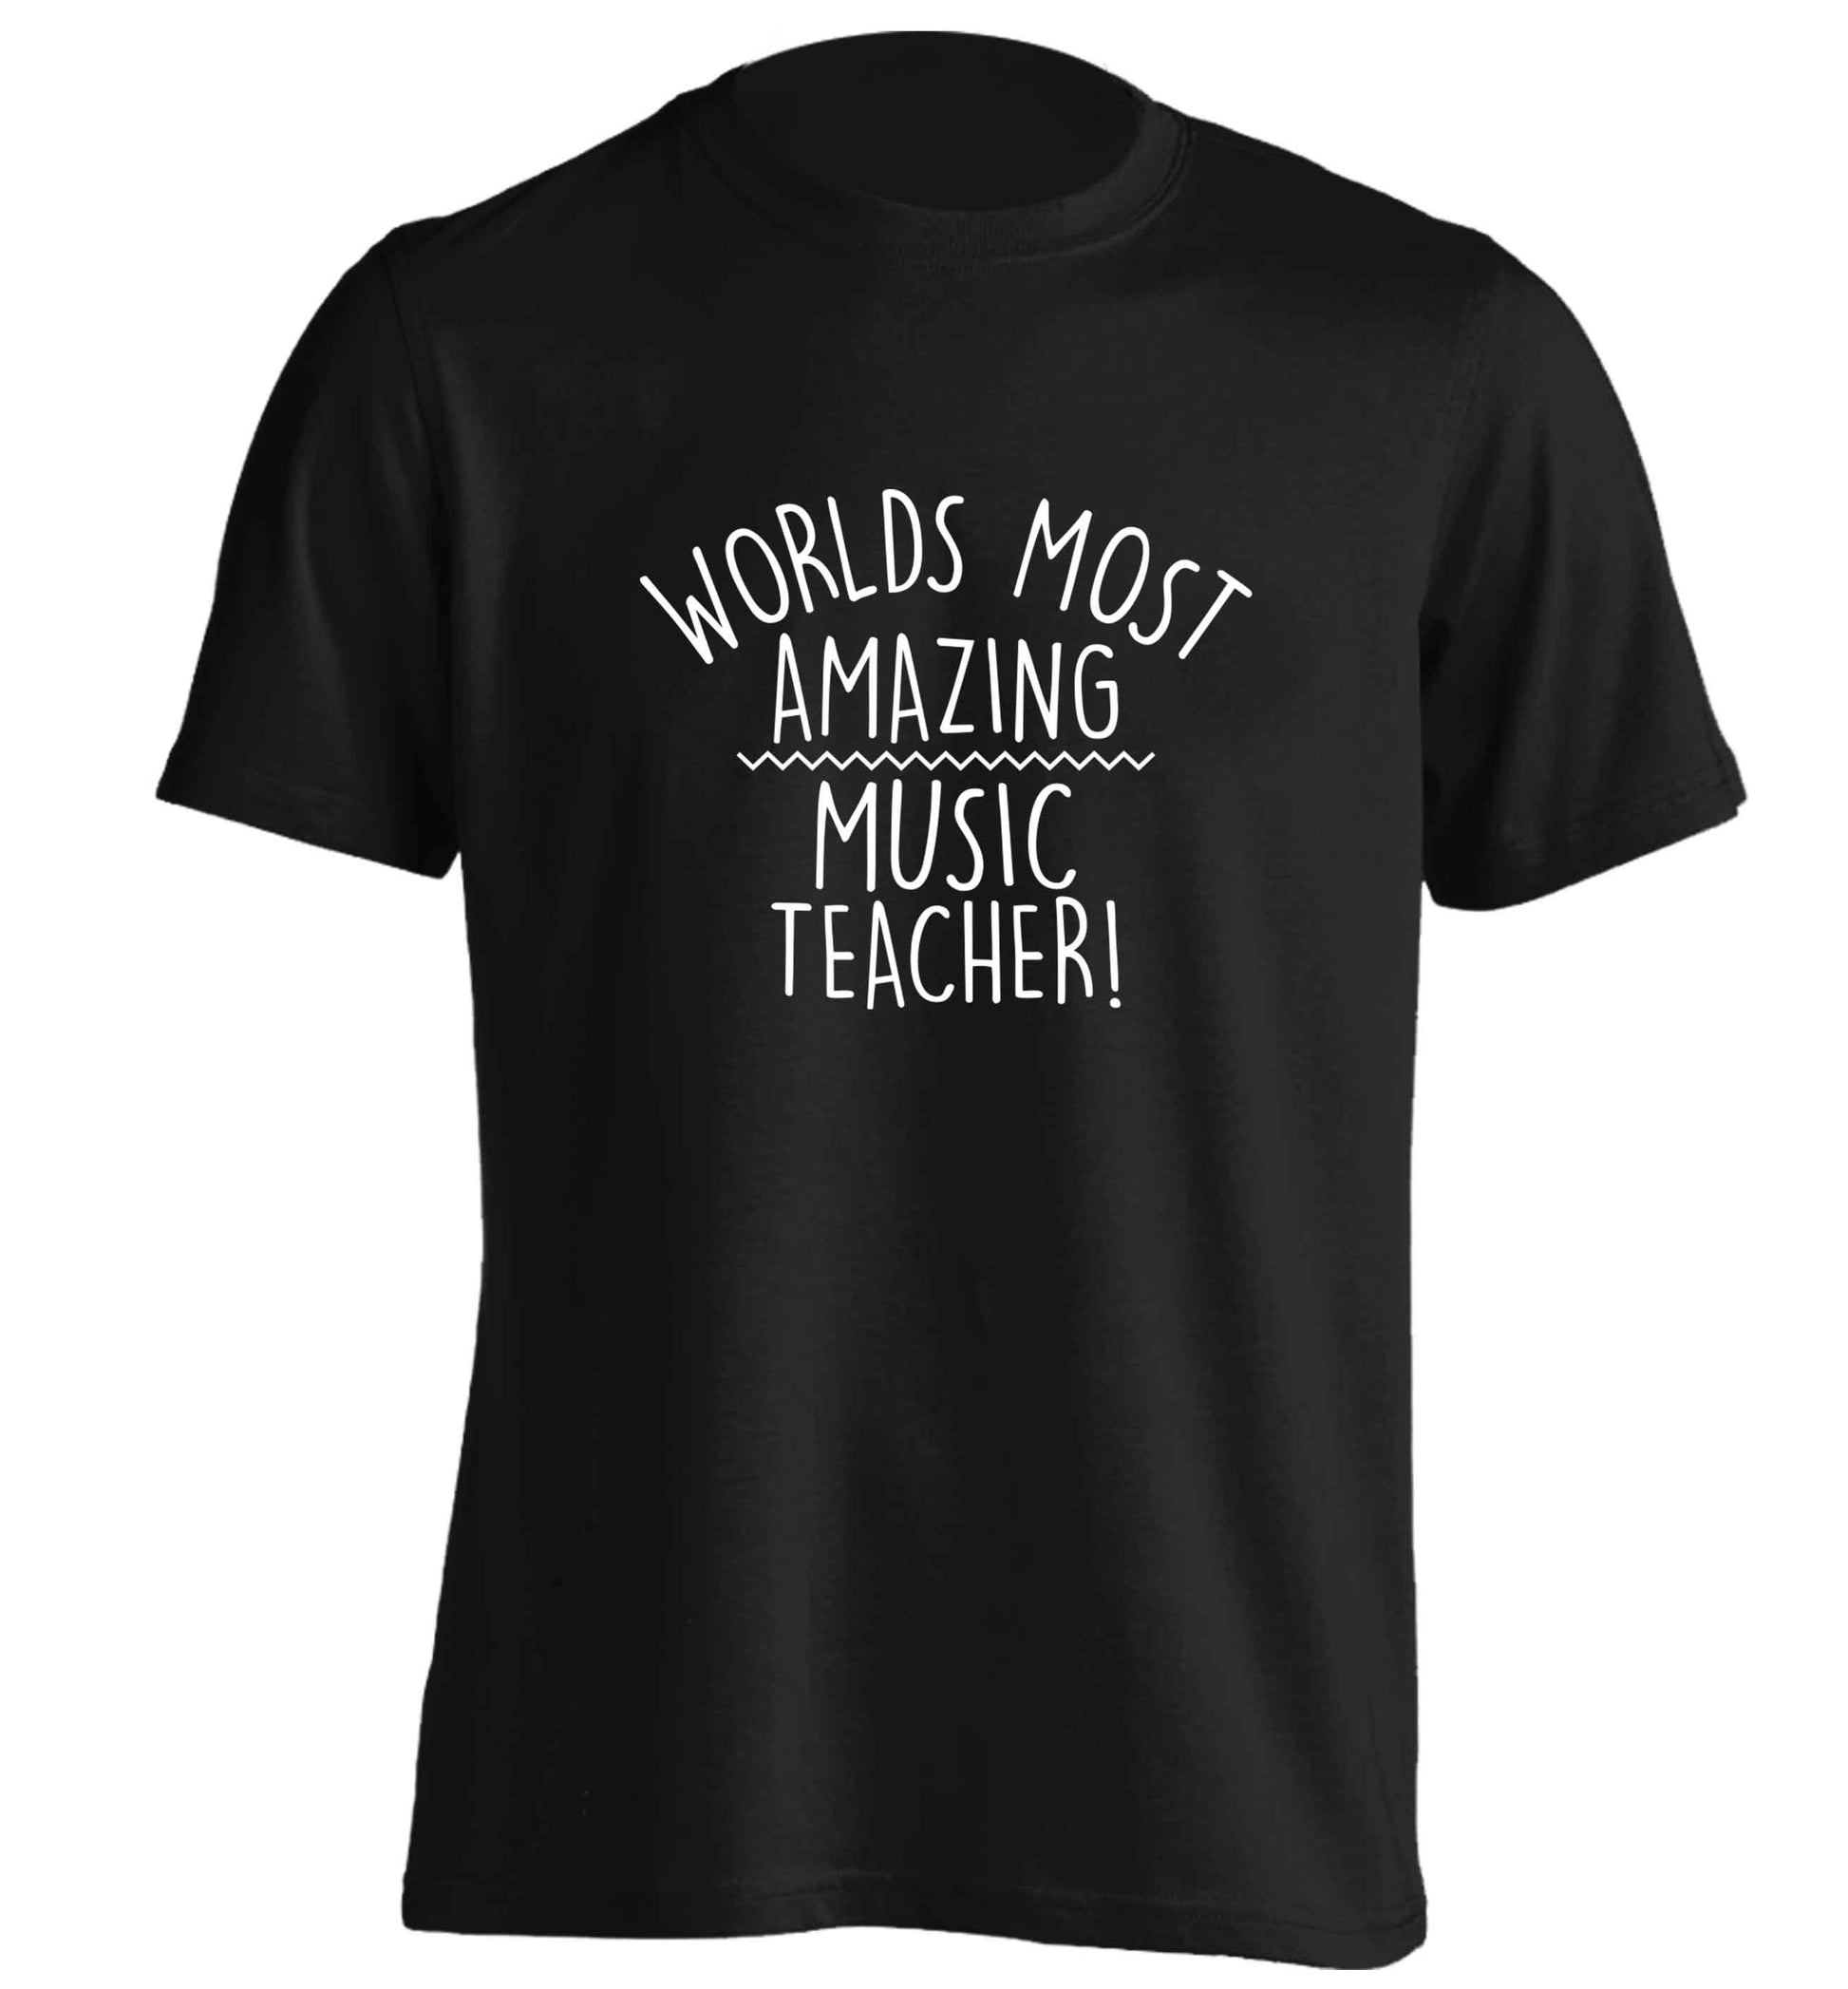 Worlds most amazing music teacher adults unisex black Tshirt 2XL